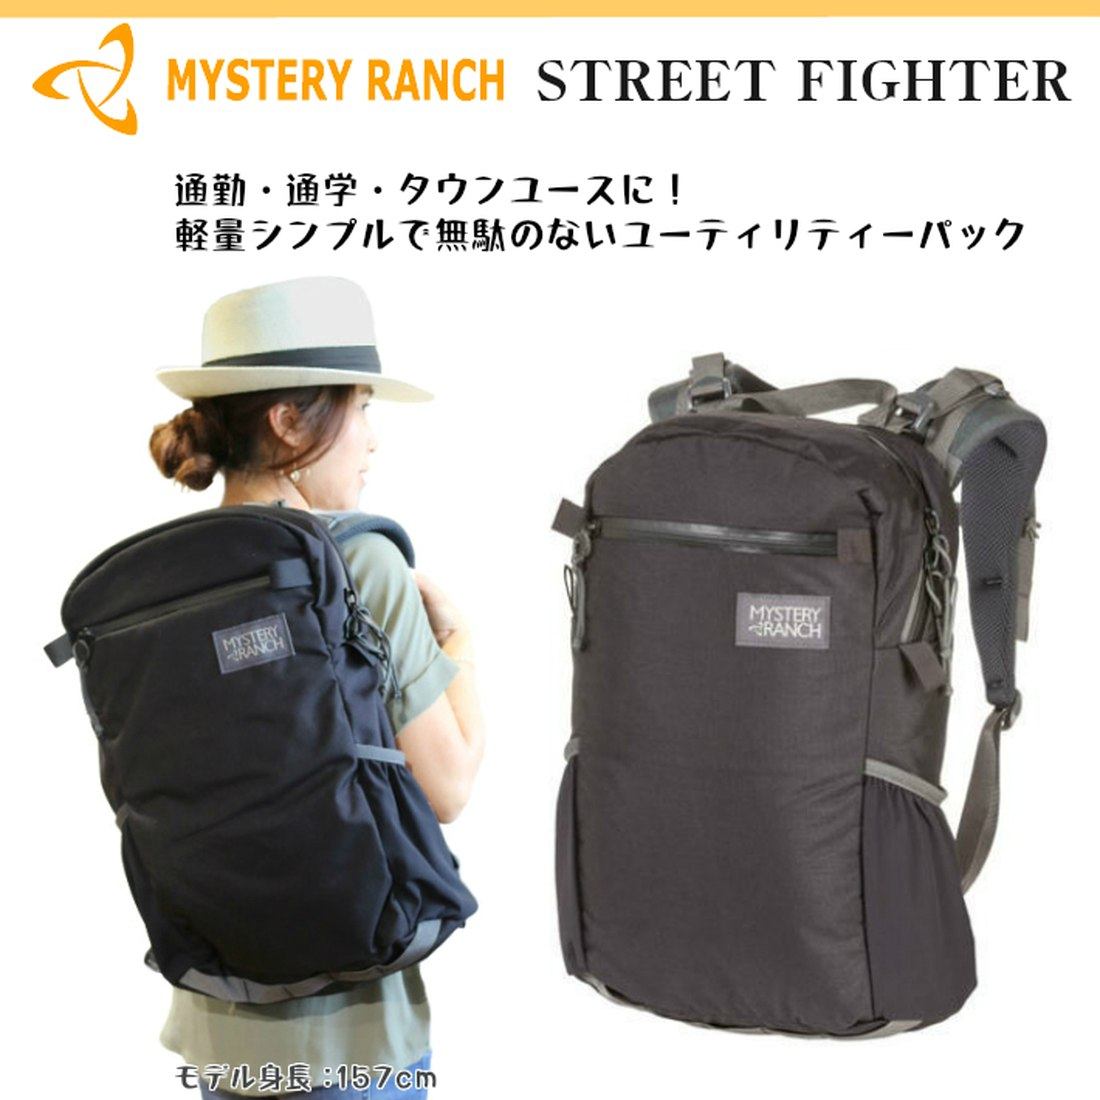 Mystery Ranch ストリートファイター - 通販 - gofukuyasan.com